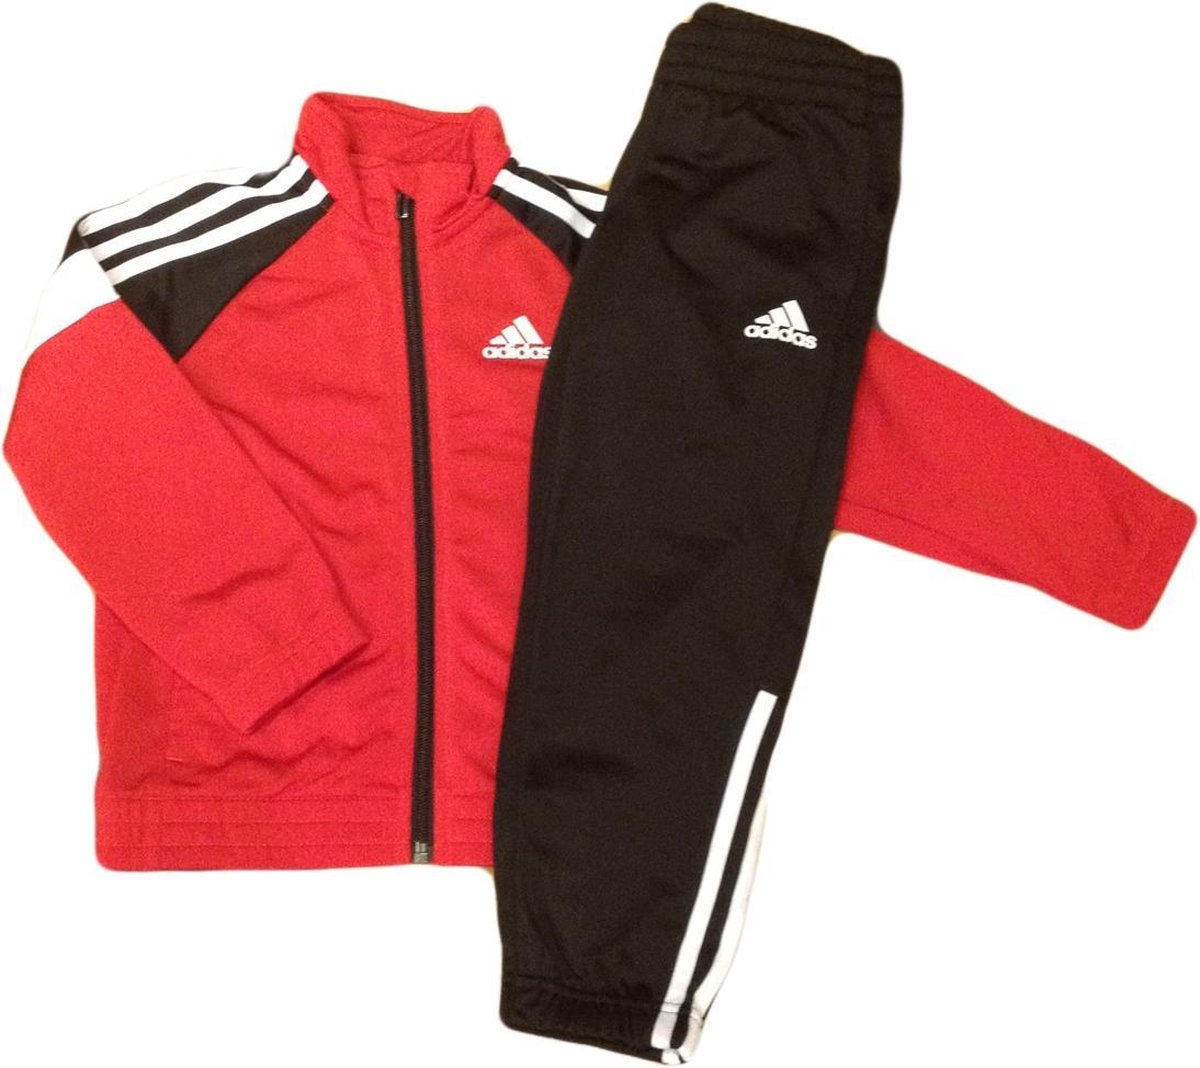 Adidas Kinder Trainingspak -Maat 110 - Rood/Zwart | bol.com